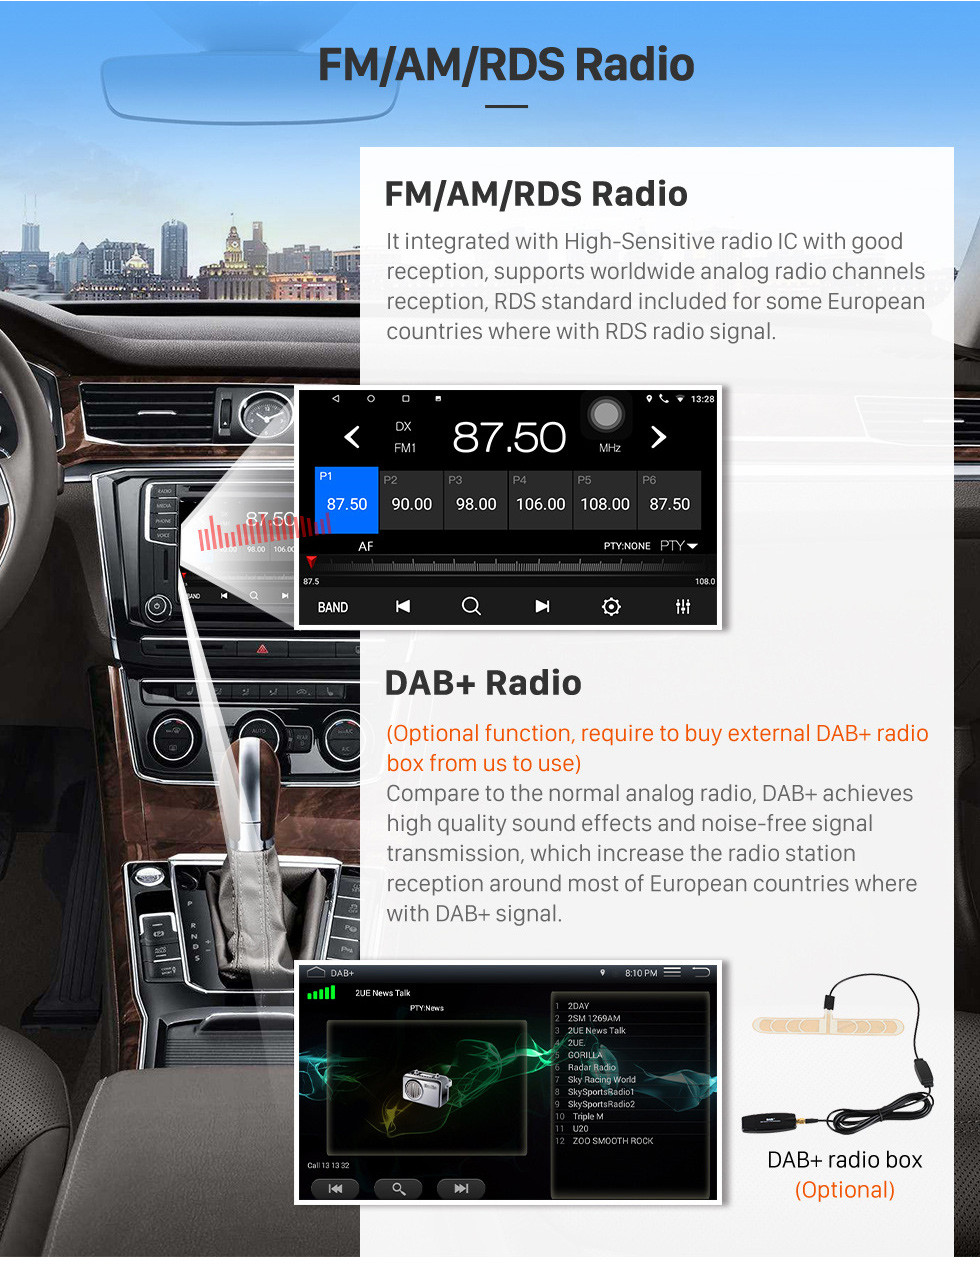 Seicane 2015-2018 Suzuki Celerio Android 10.0 HD Touchscreen 9 inch Head Unit Bluetooth GPS Navigation Radio with AUX support OBD2 SWC Carplay